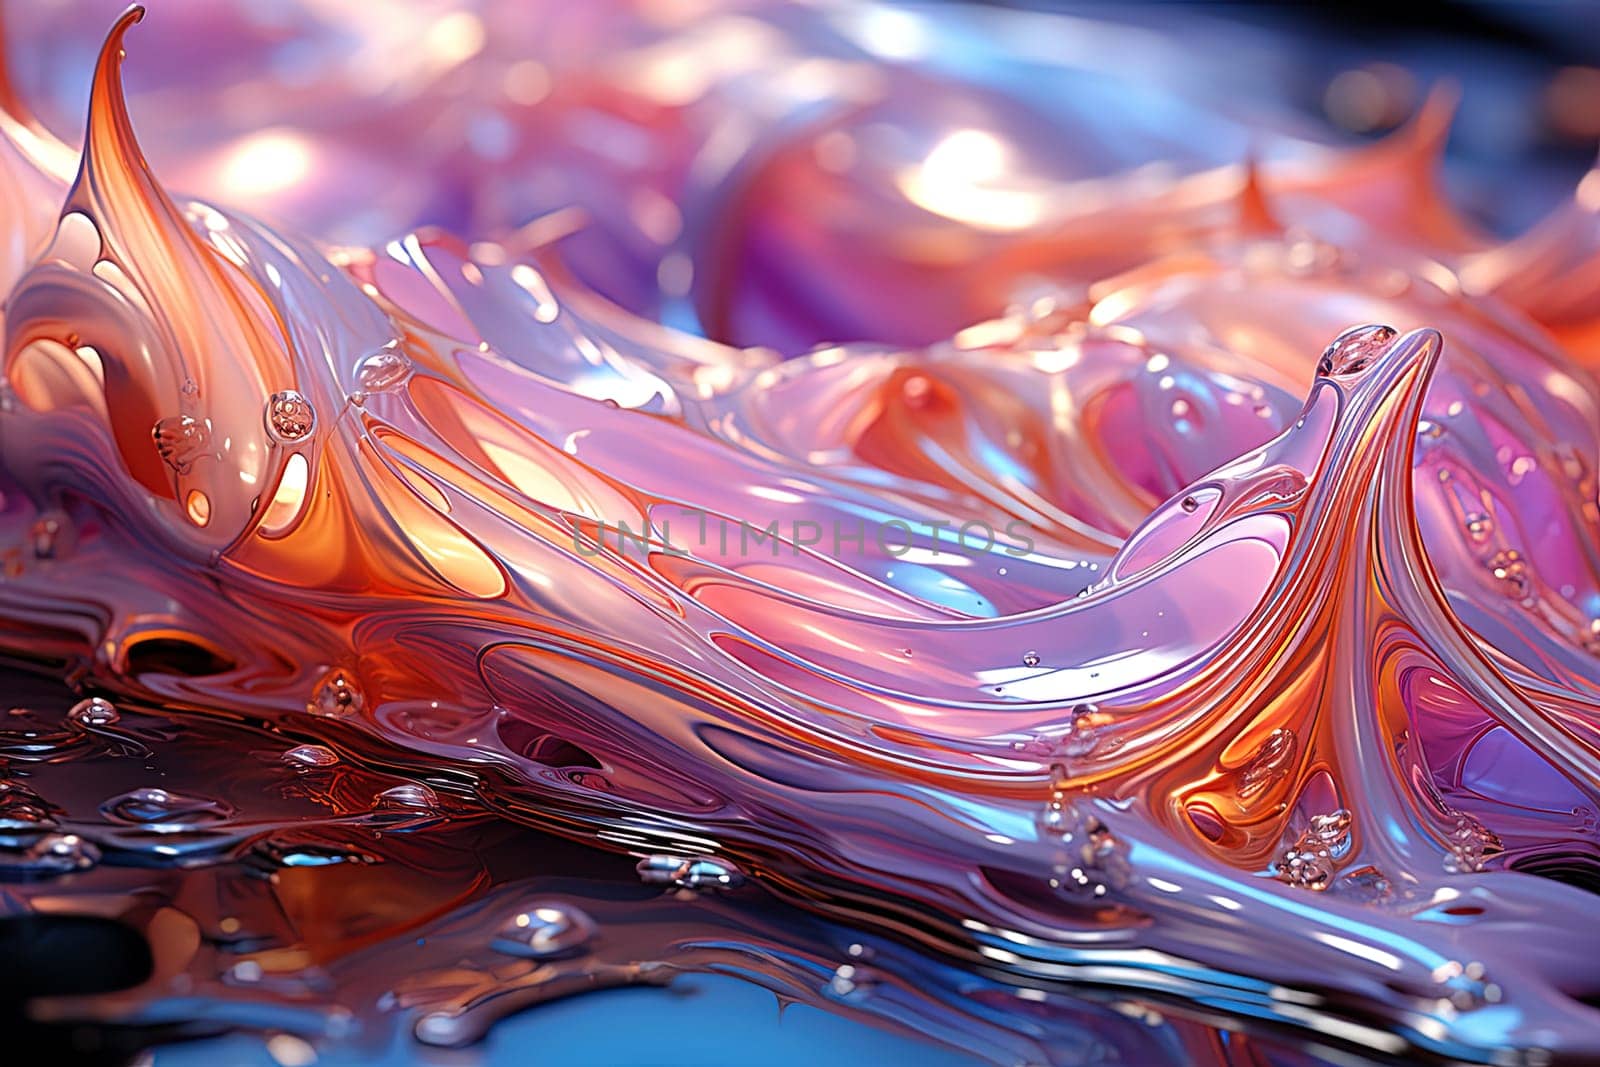 y2k swirling liquid aesthetic background by Dustick